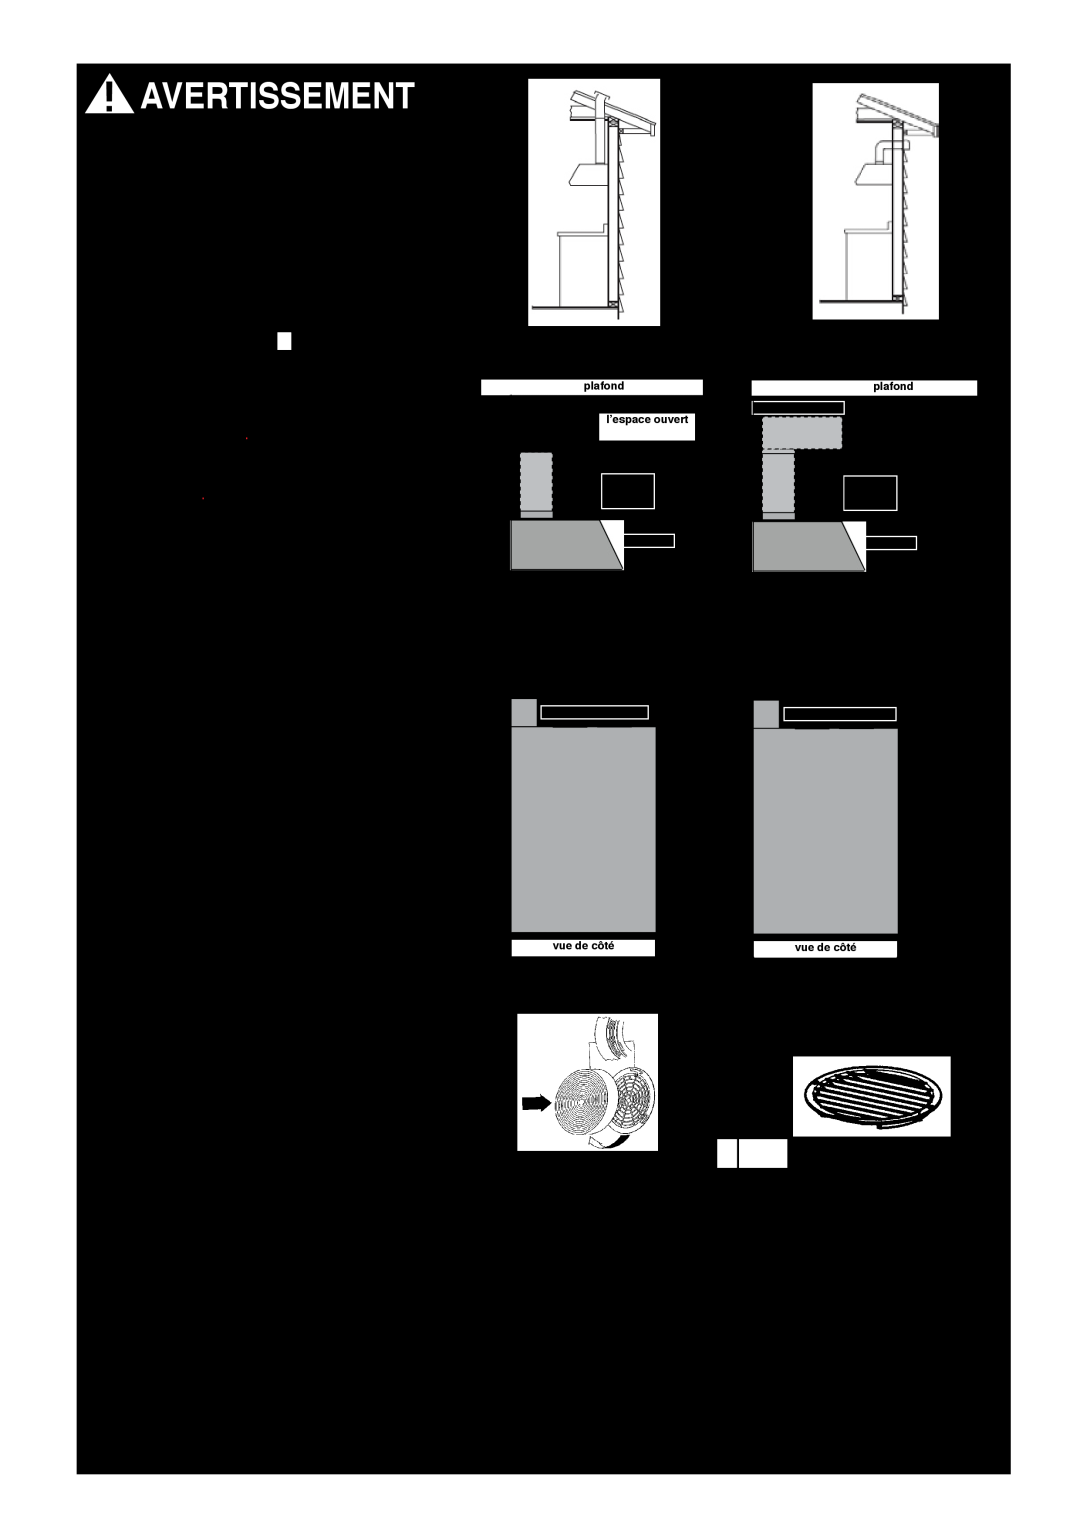 Faber Cabinet Rangehood installation instructions Avertissement, Plan Du Conduit, Calcul De Longueur Du Conduit 